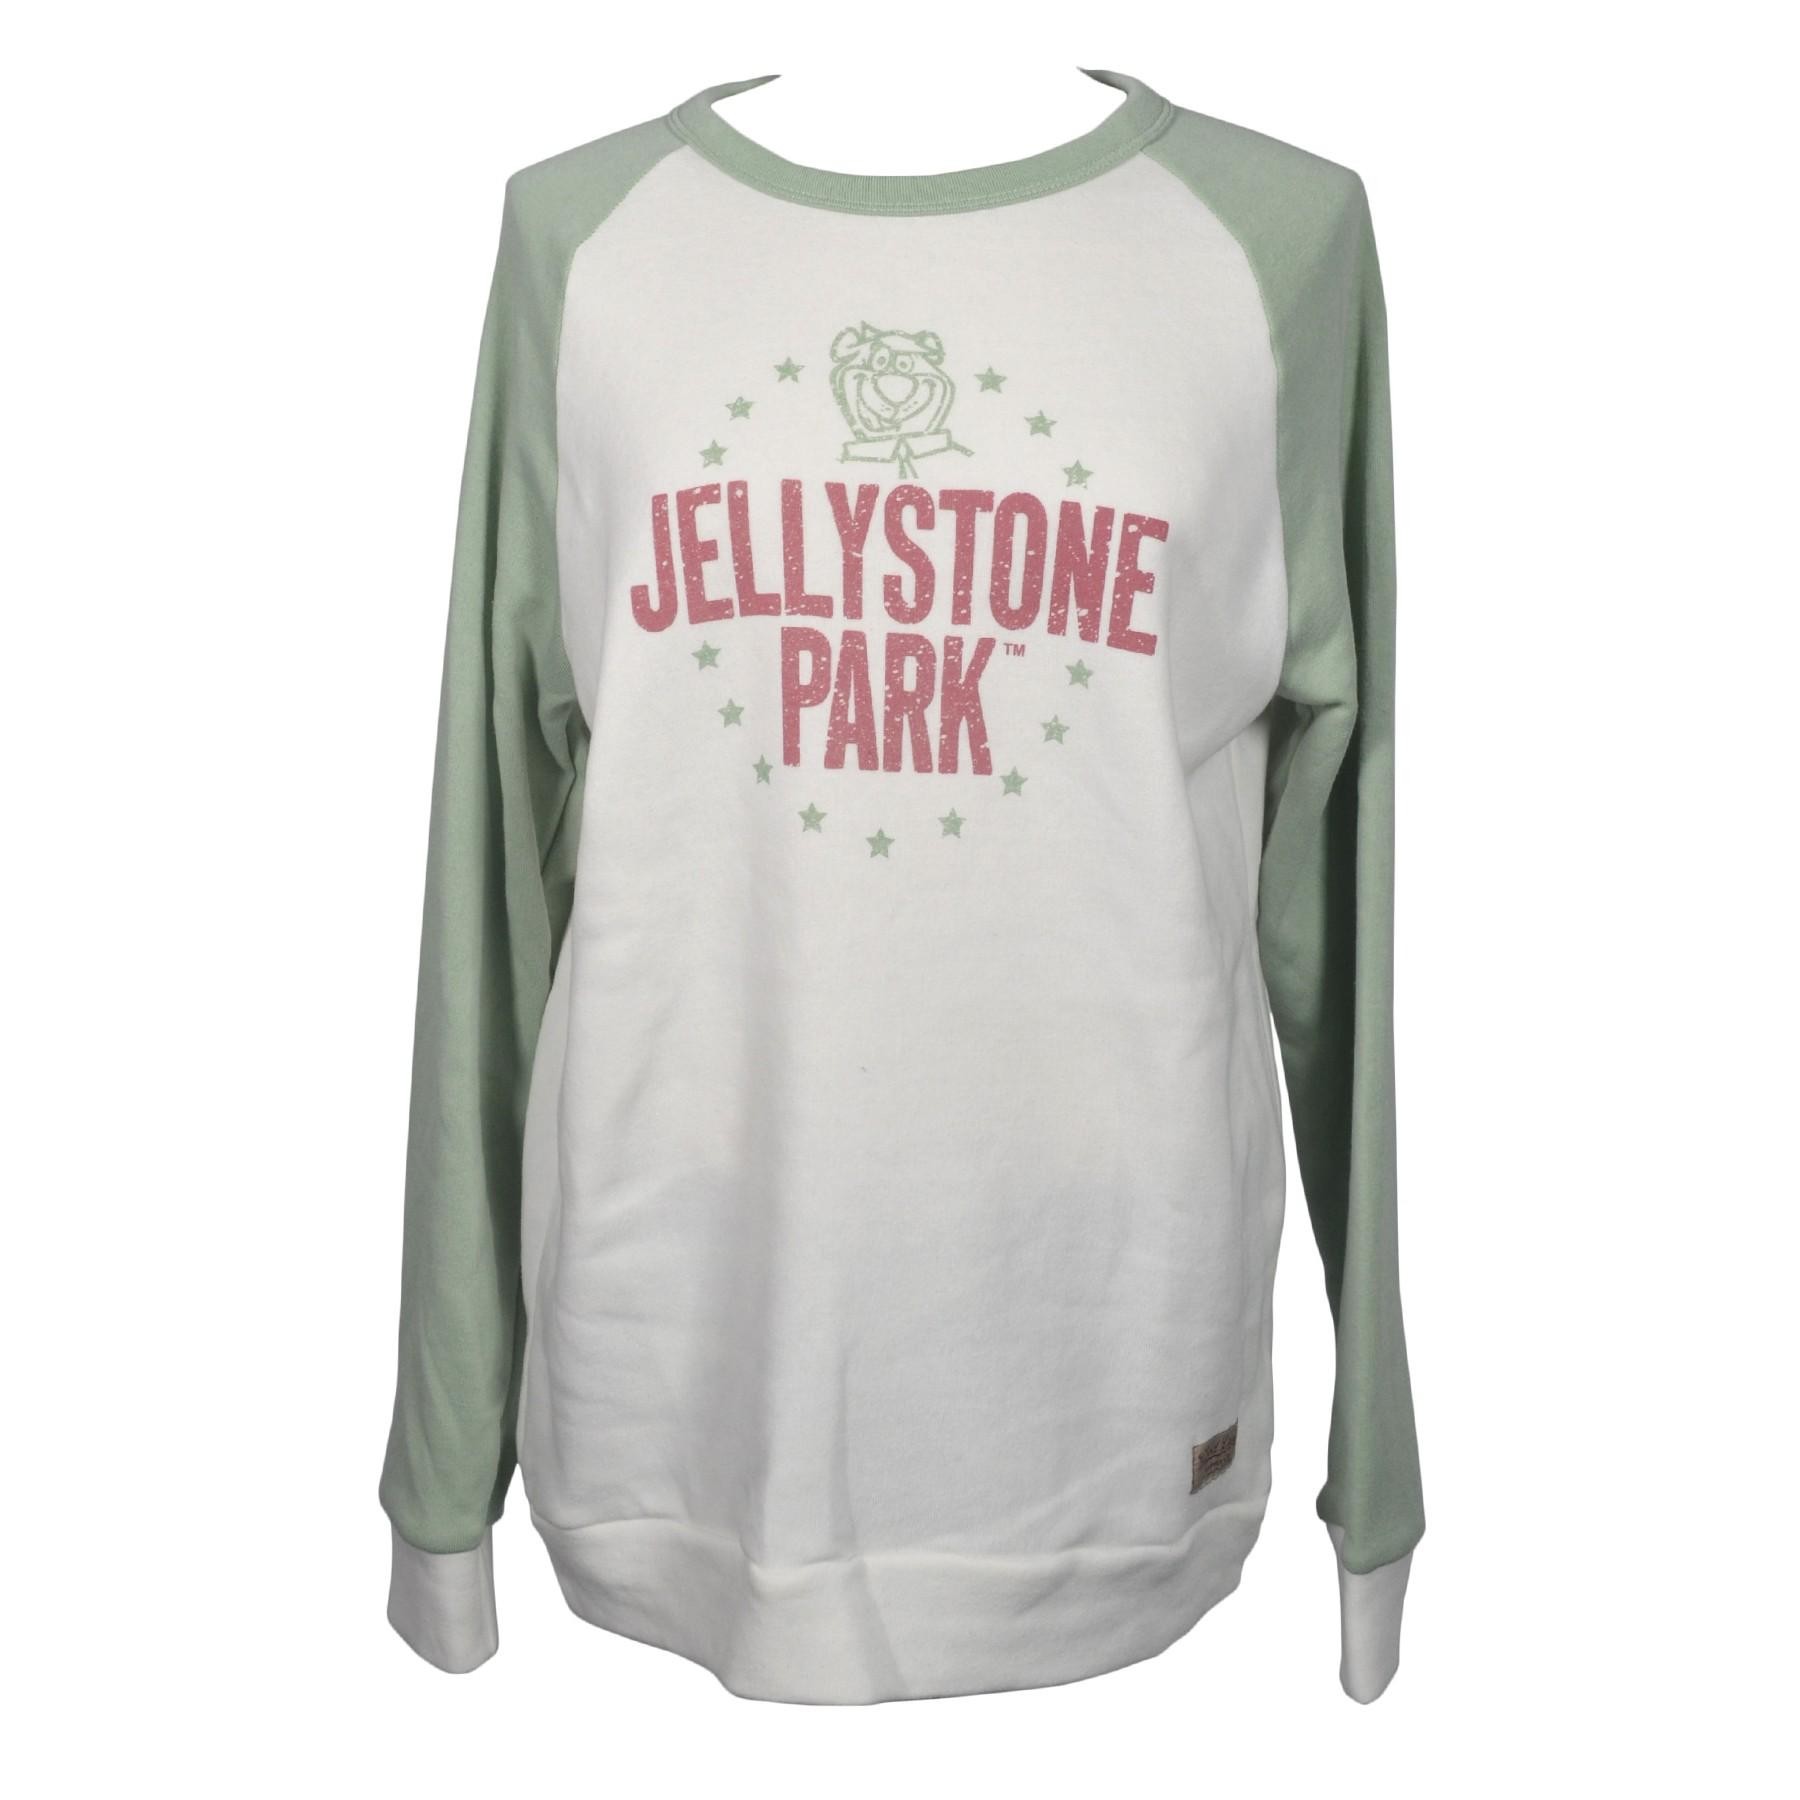 Jellystone Park Green & White Sweater (M)